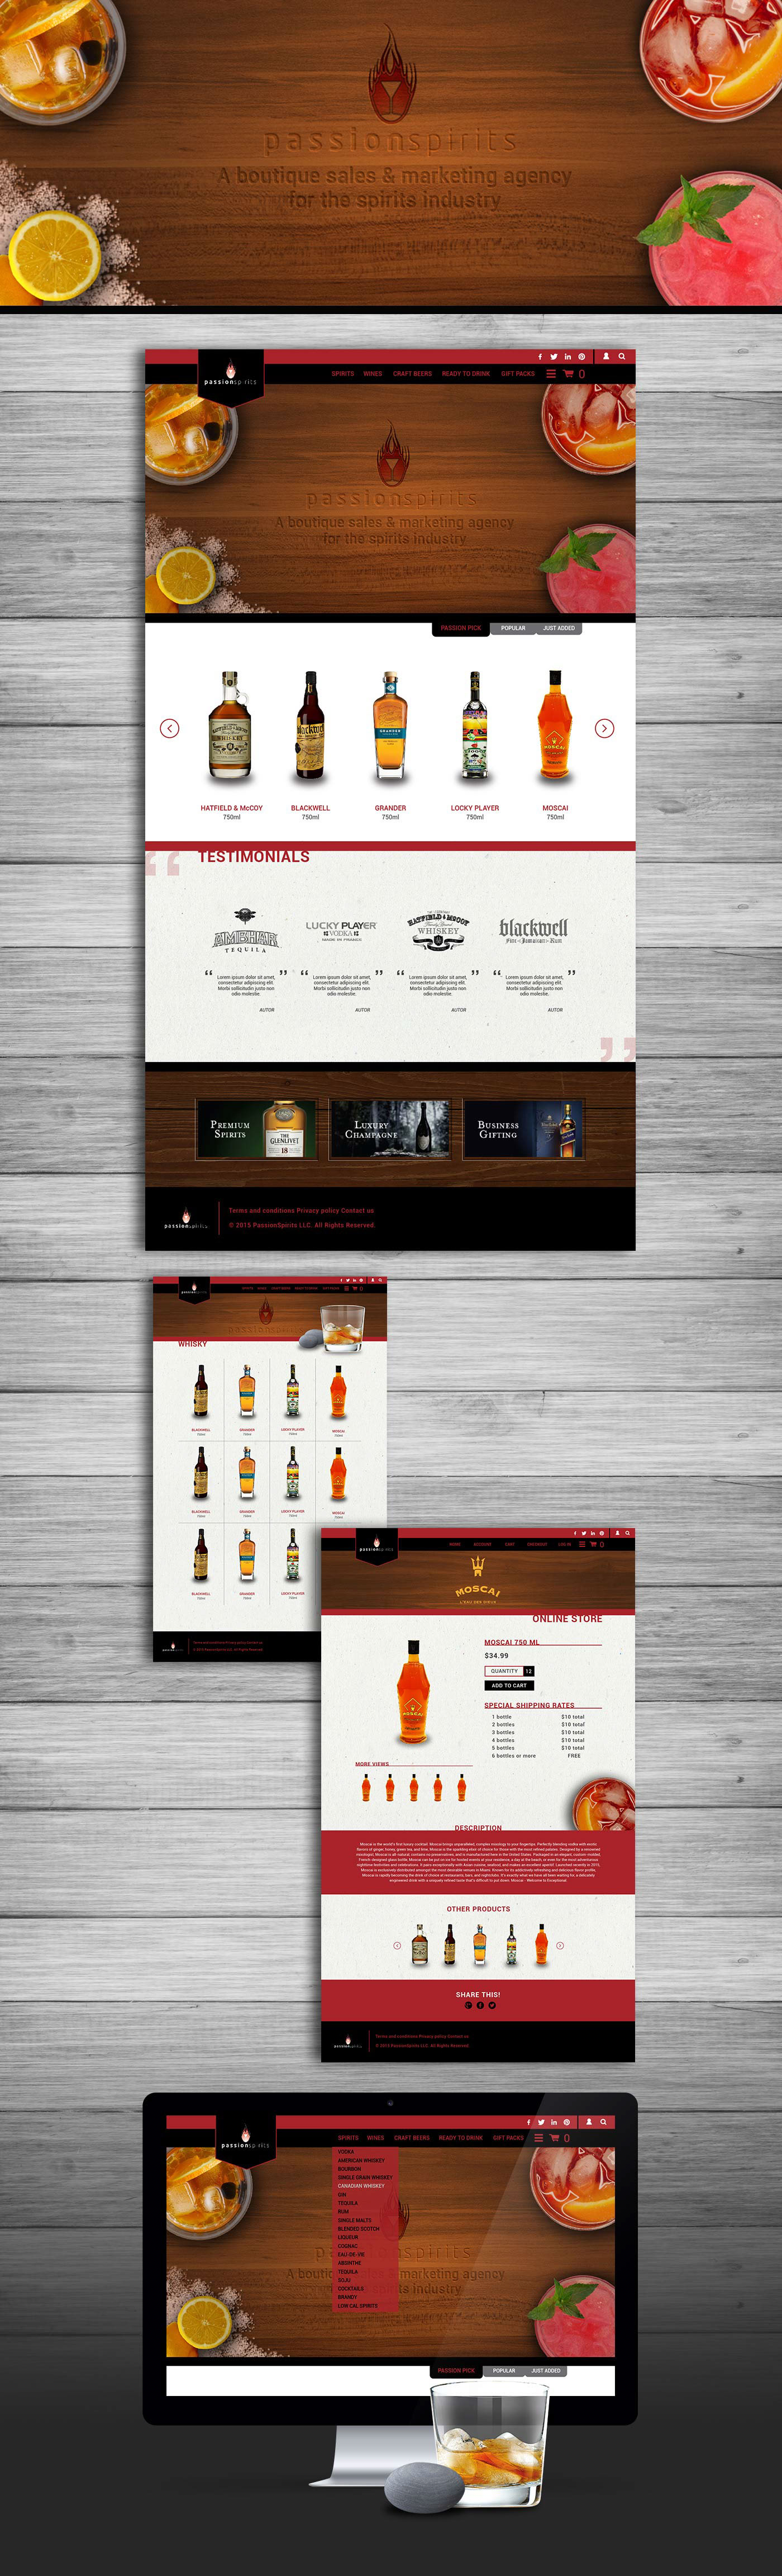 Web Design  UI ux user experience Interface marketing   passion spirits E COMMERCE Responsive Website